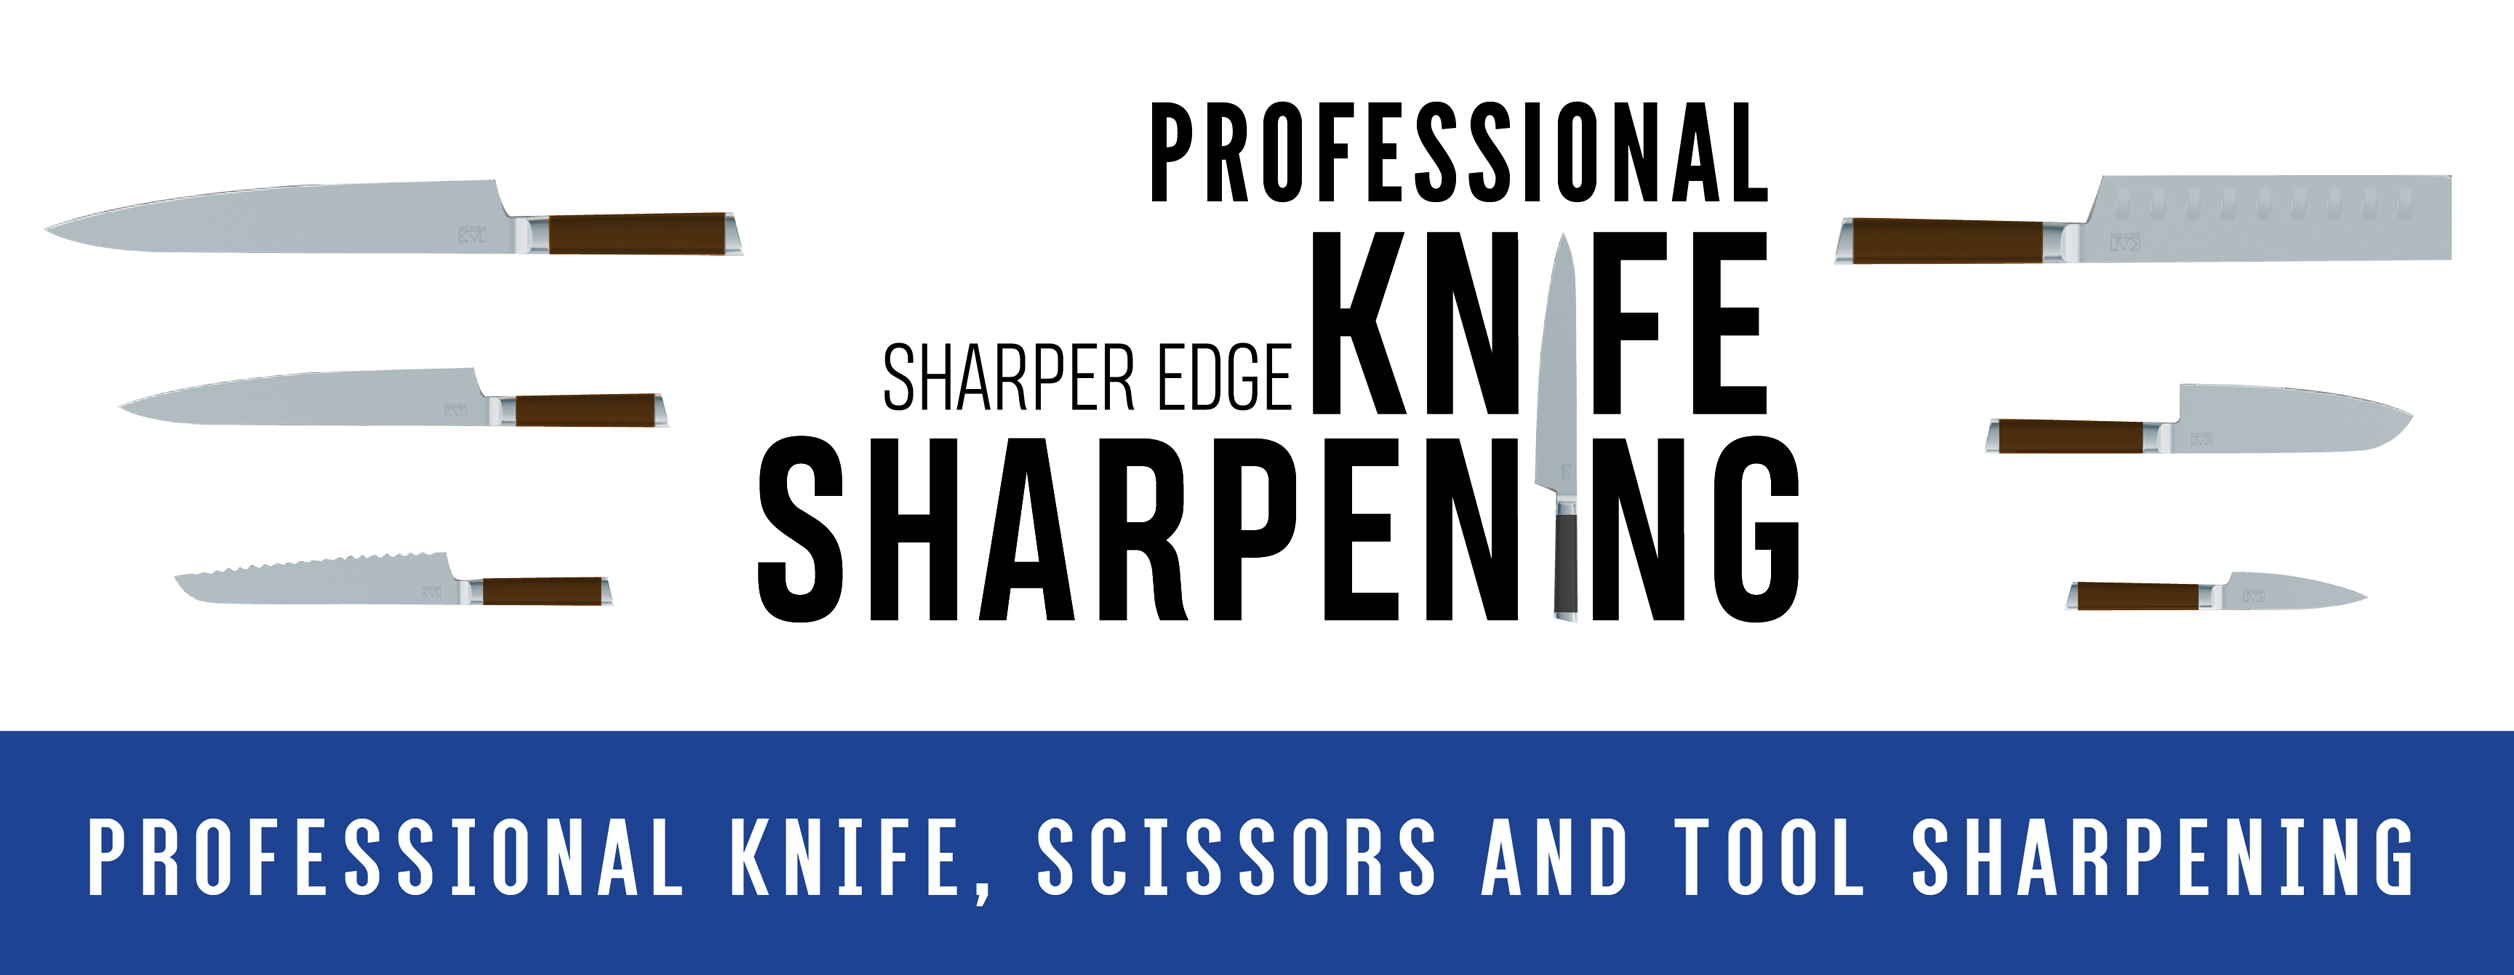 knife sharpening service